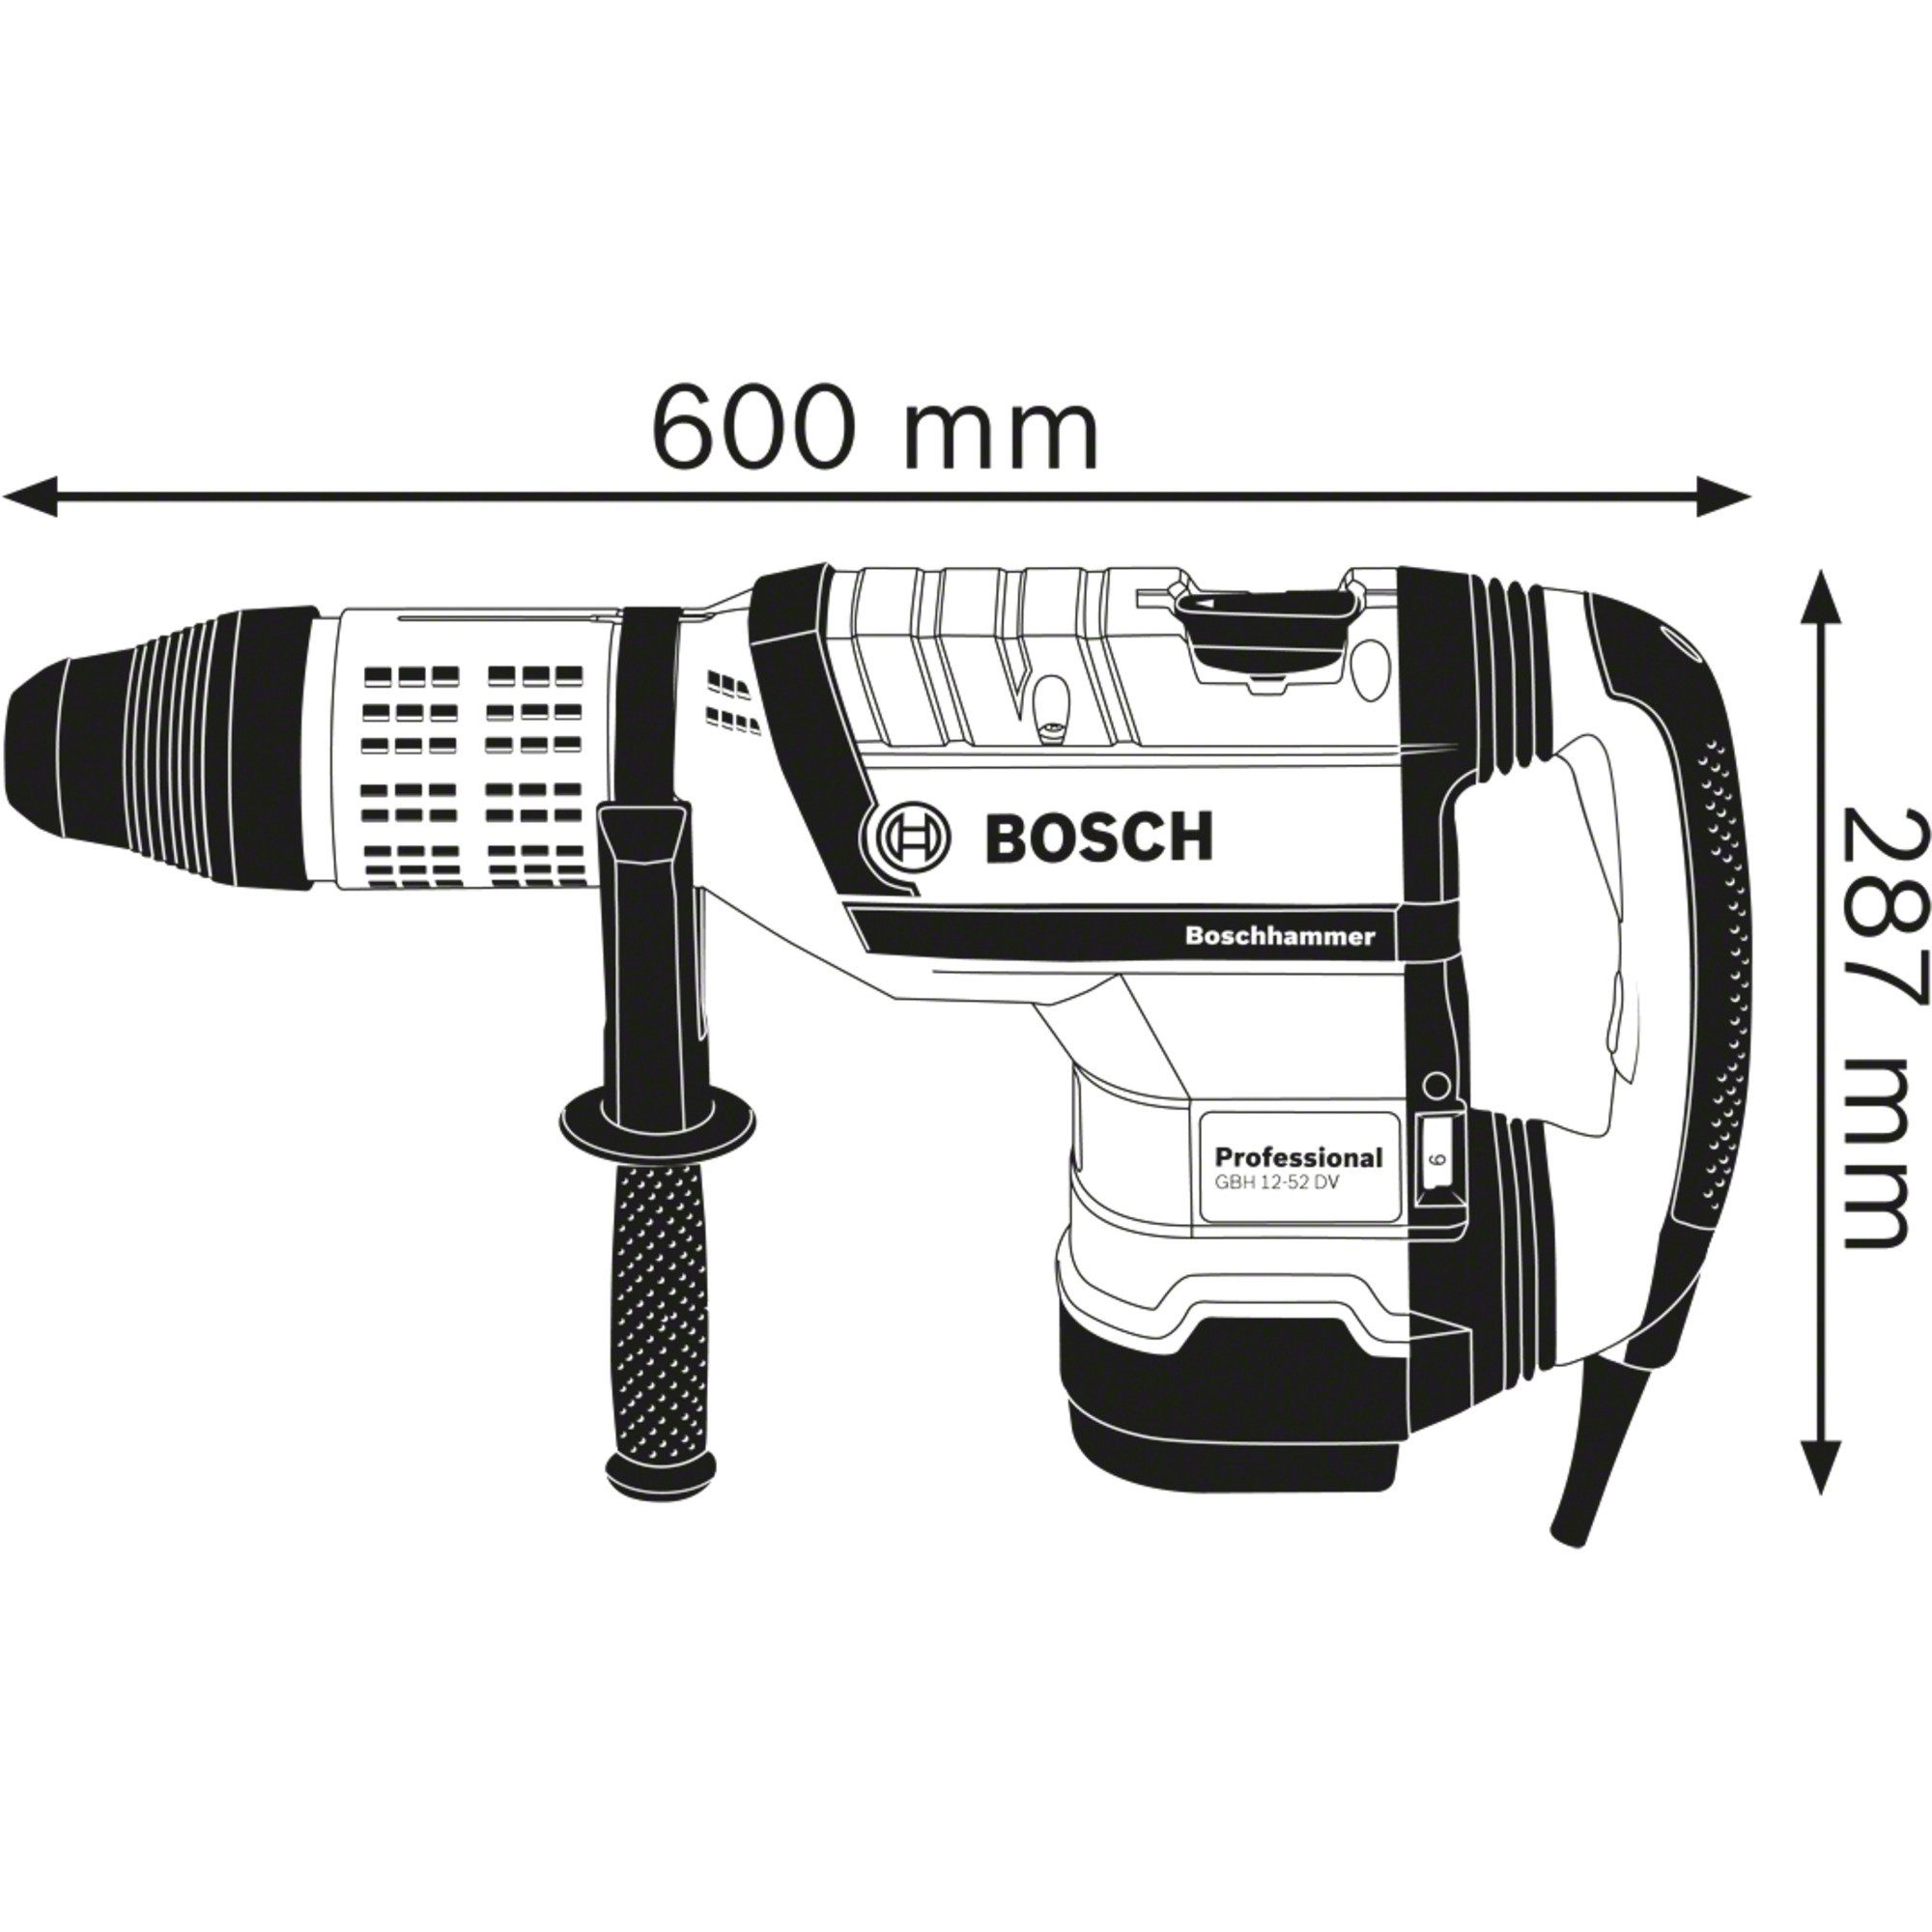 1.700 Bosch DV, GBH Bohrhammer Professional Leistung/Spannung: Bohrhammer (1.700, Watt BOSCH 12-52